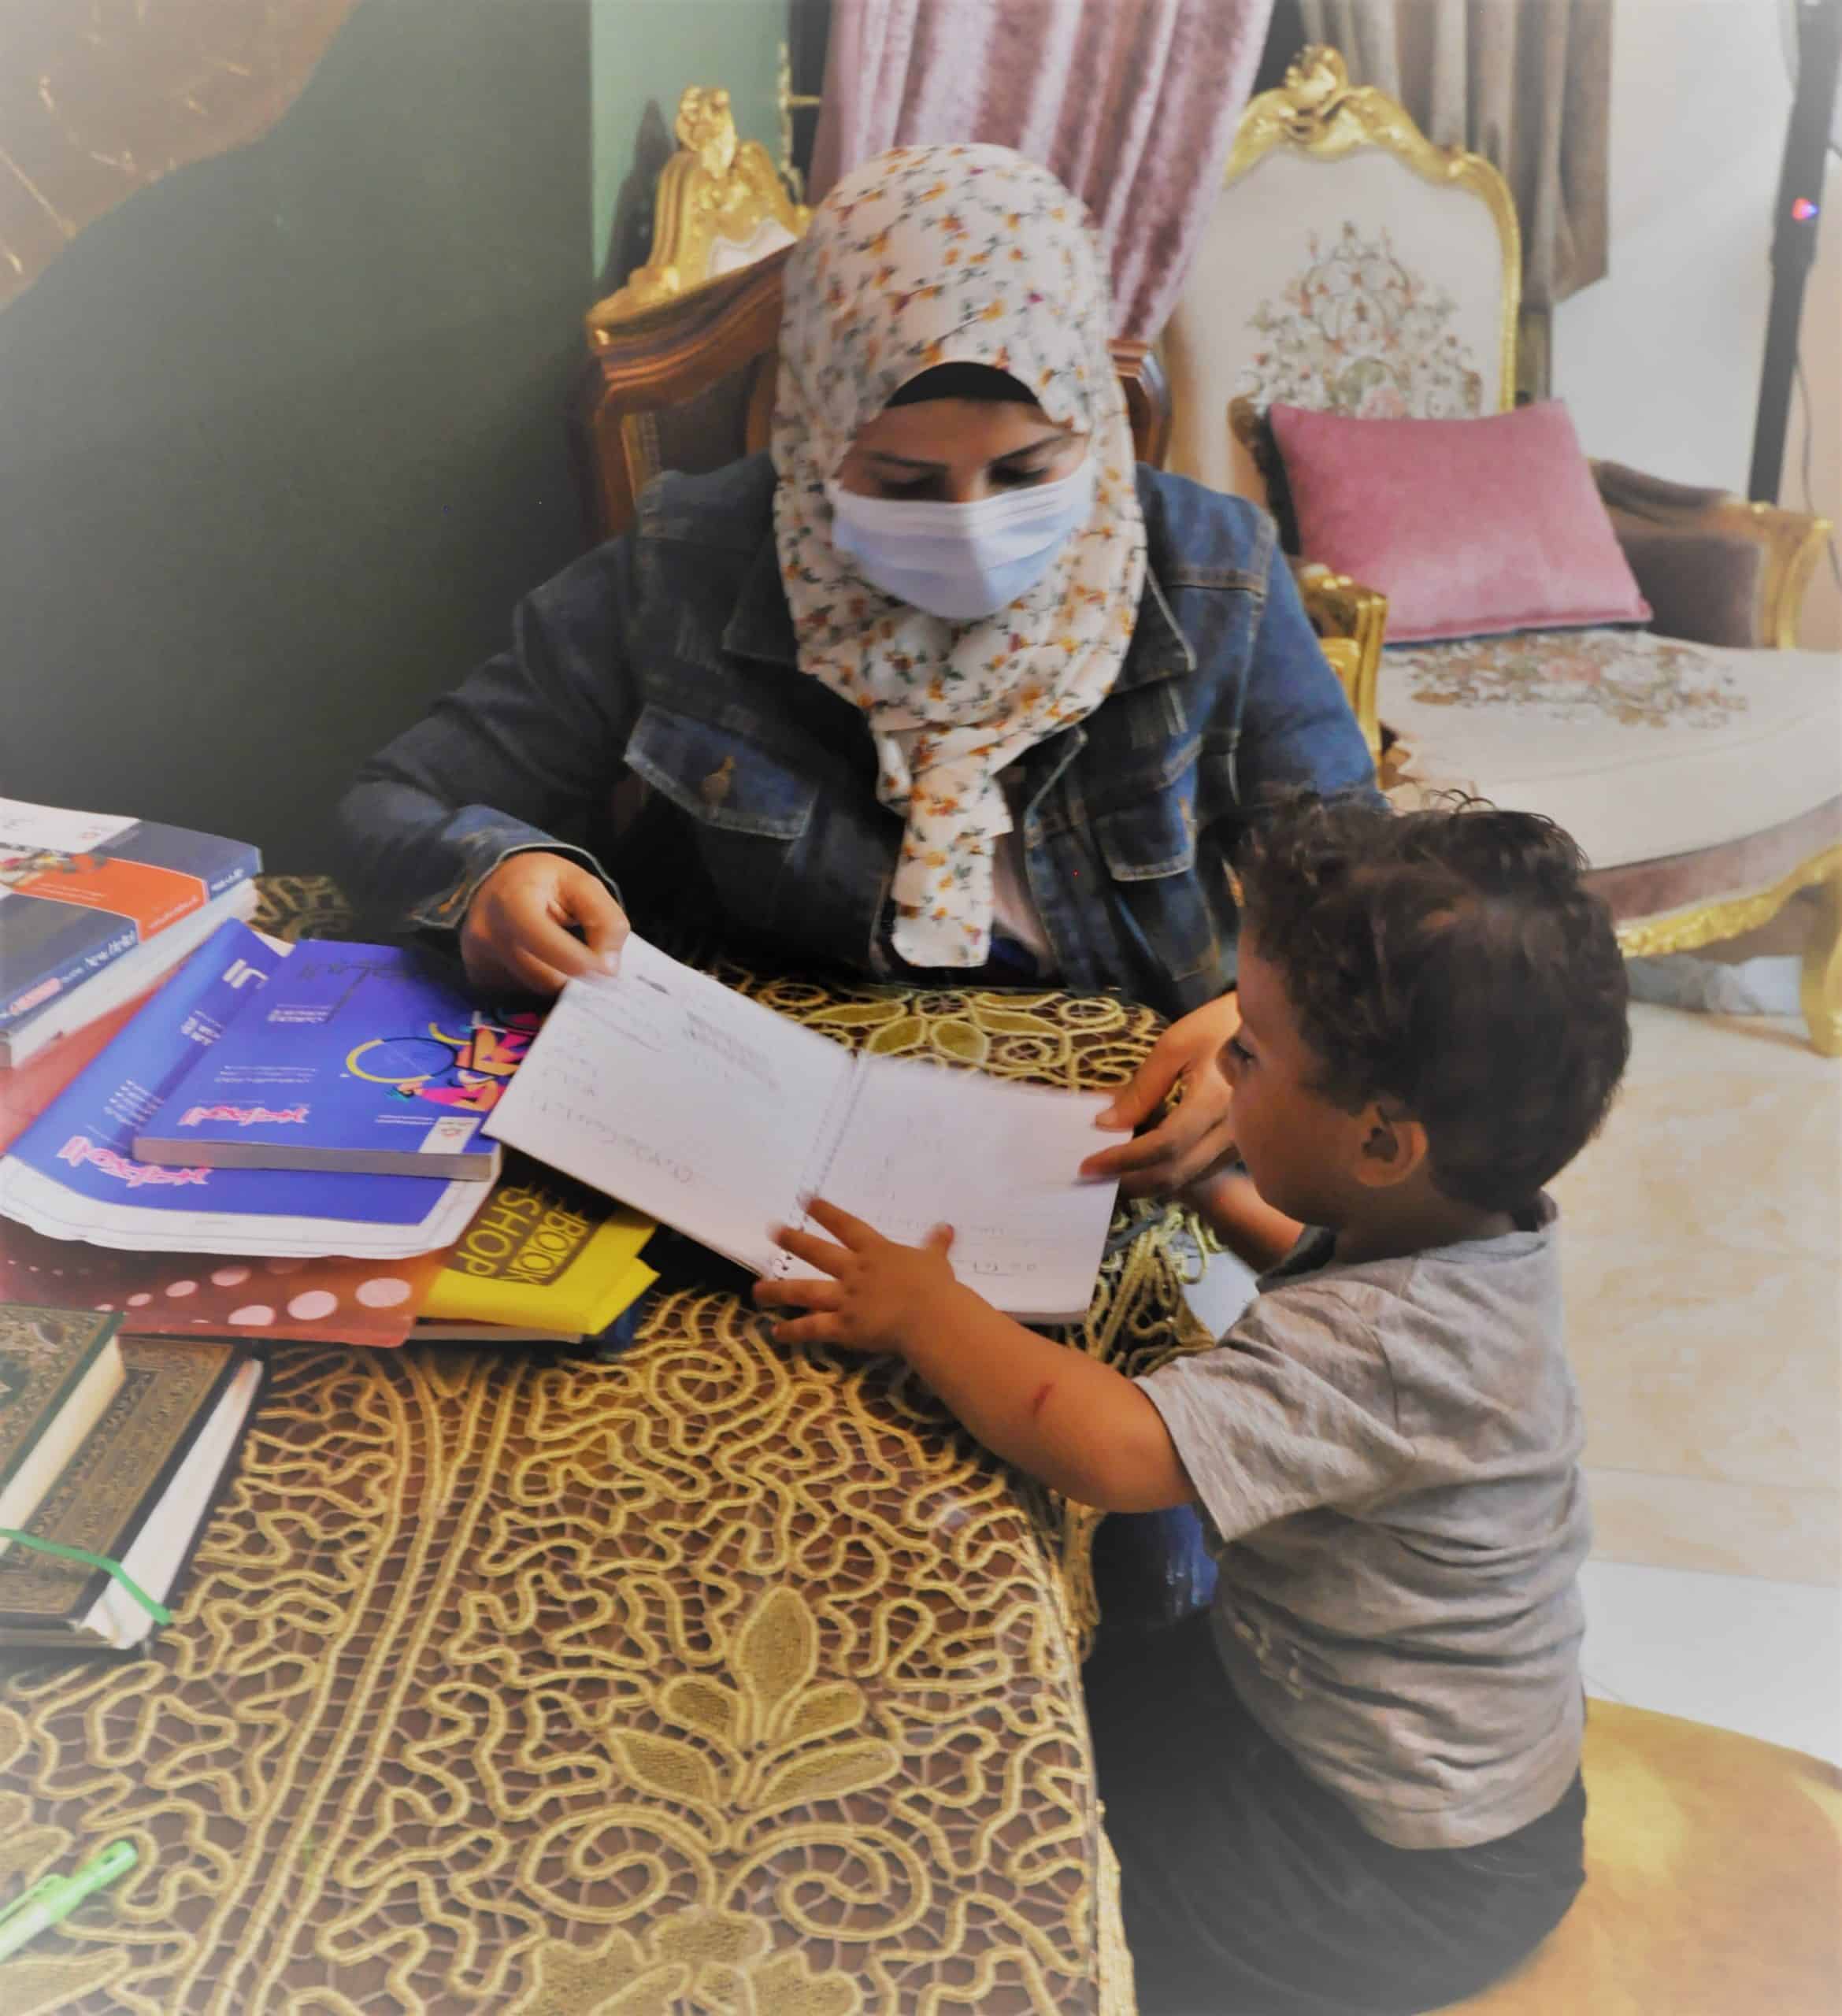 Wafaa helps her son with homework